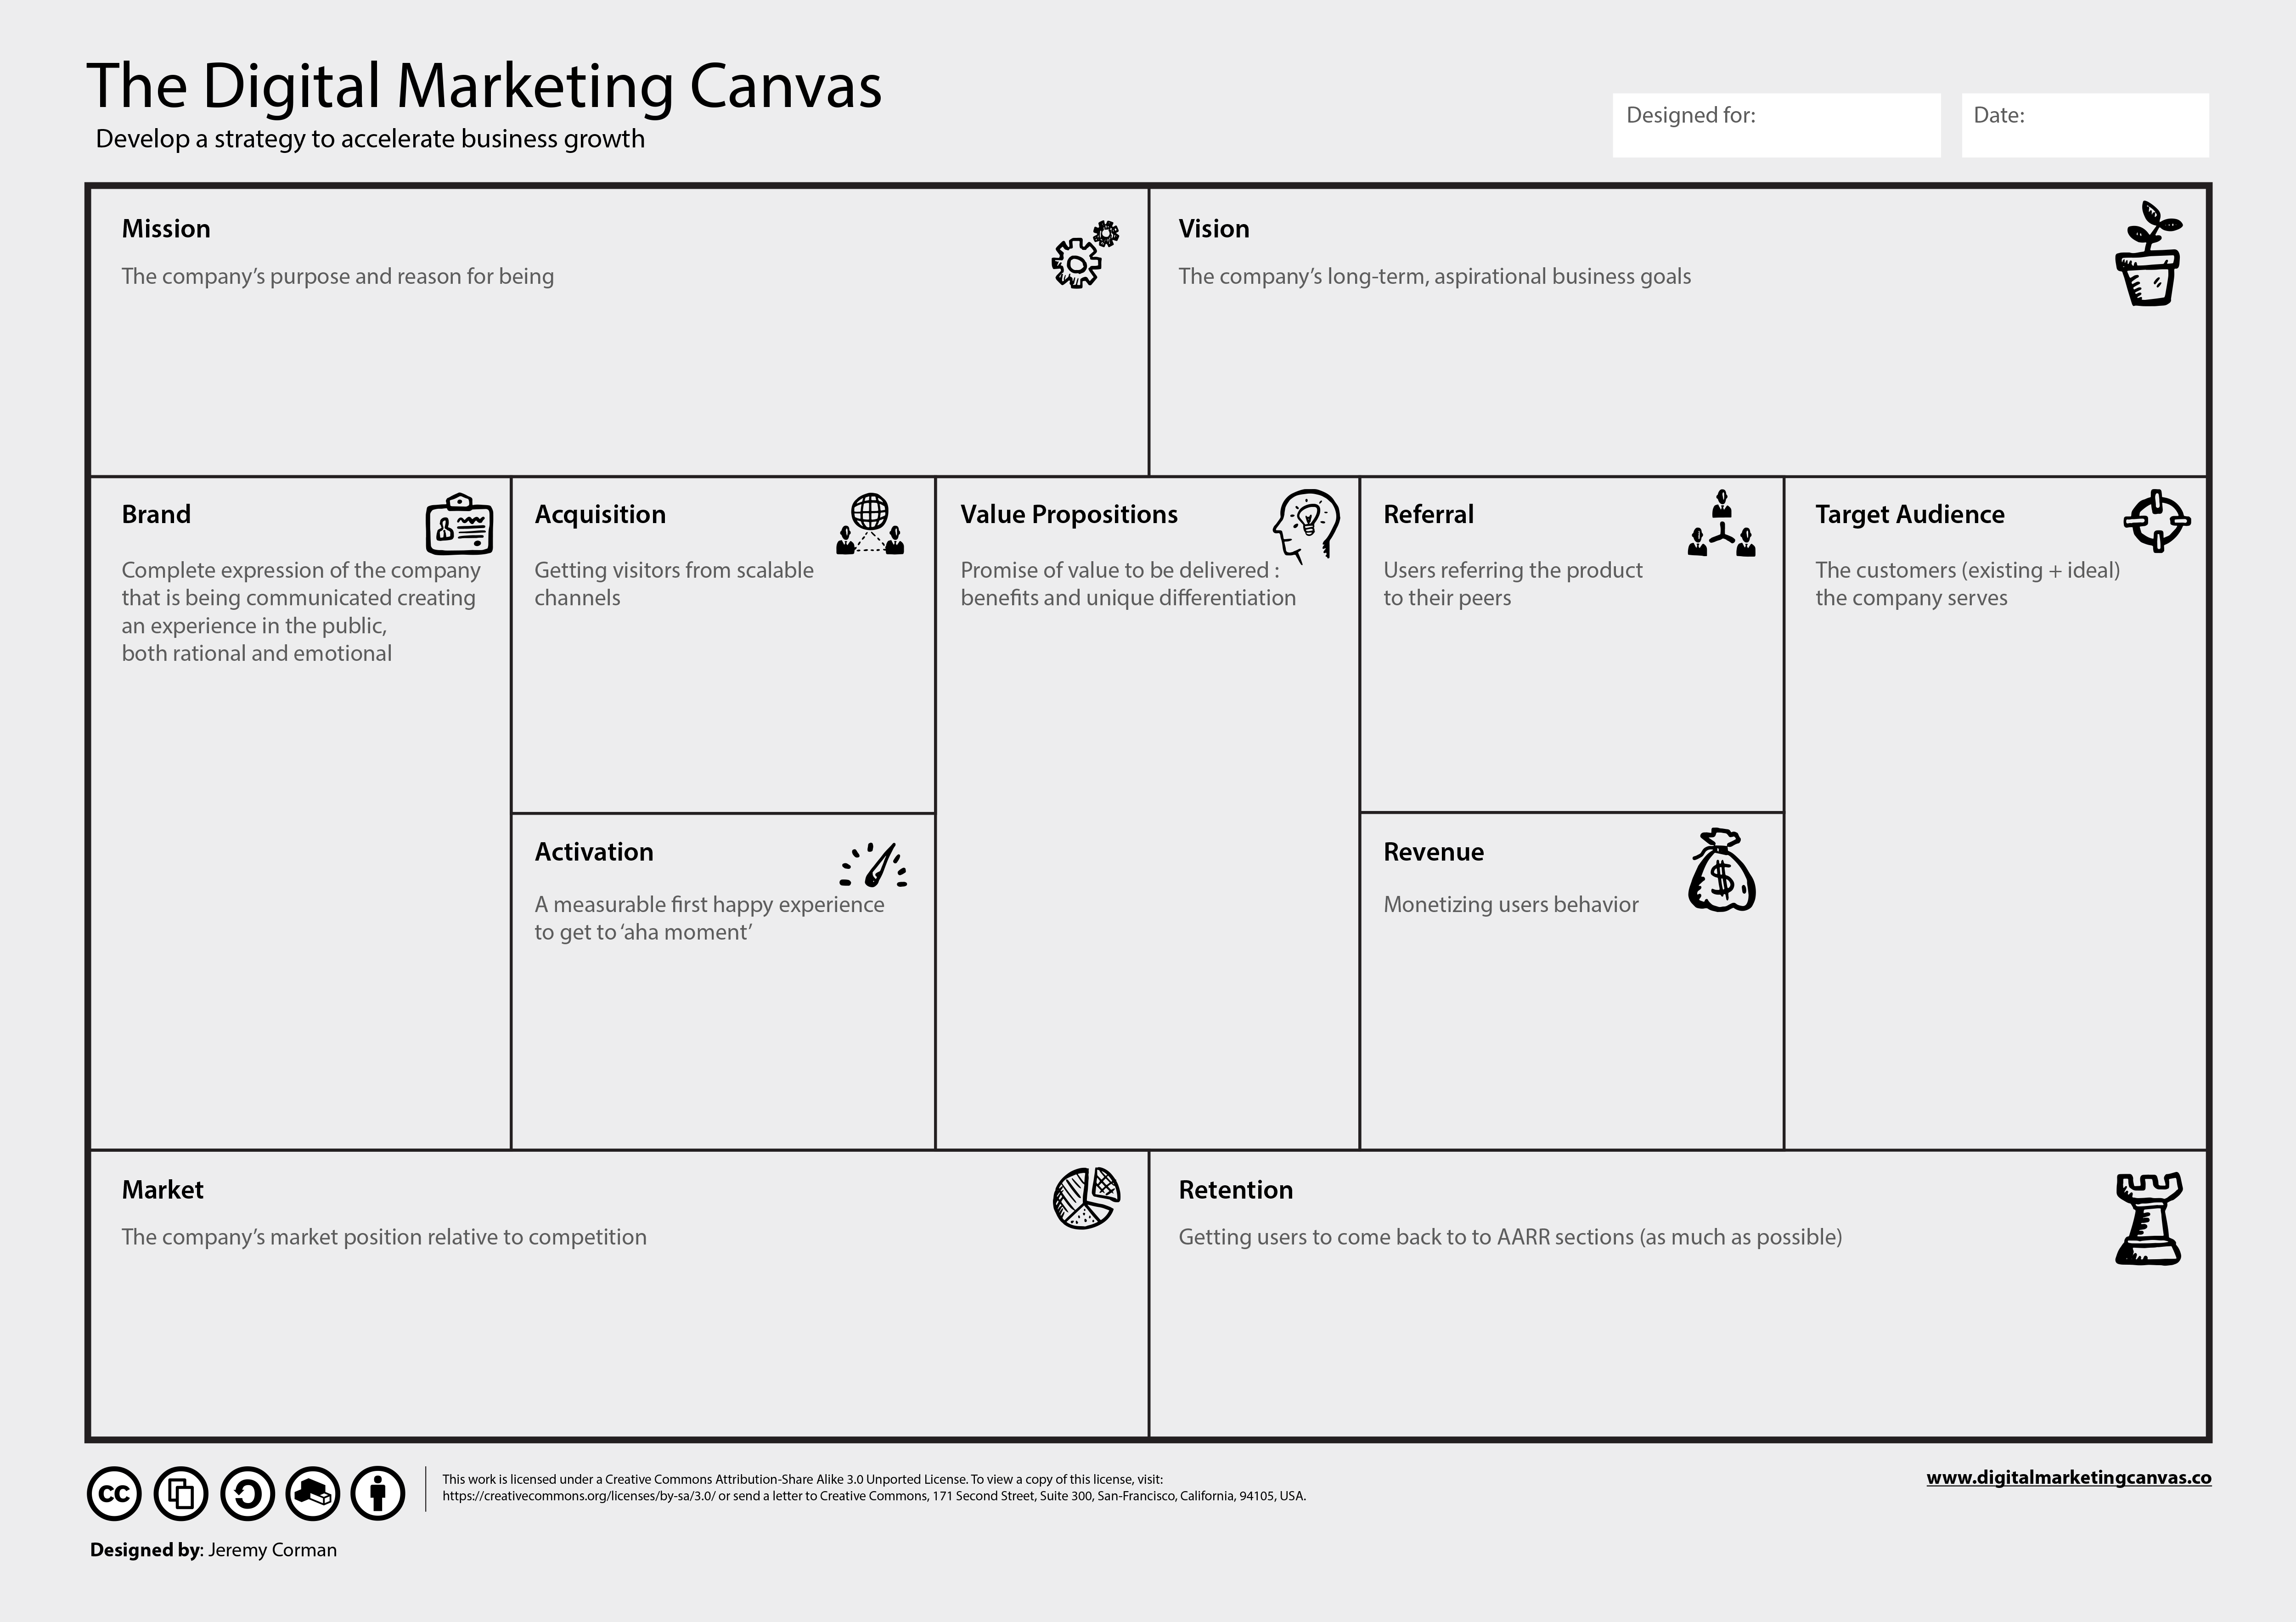 Digital Marketing Canvas Tool